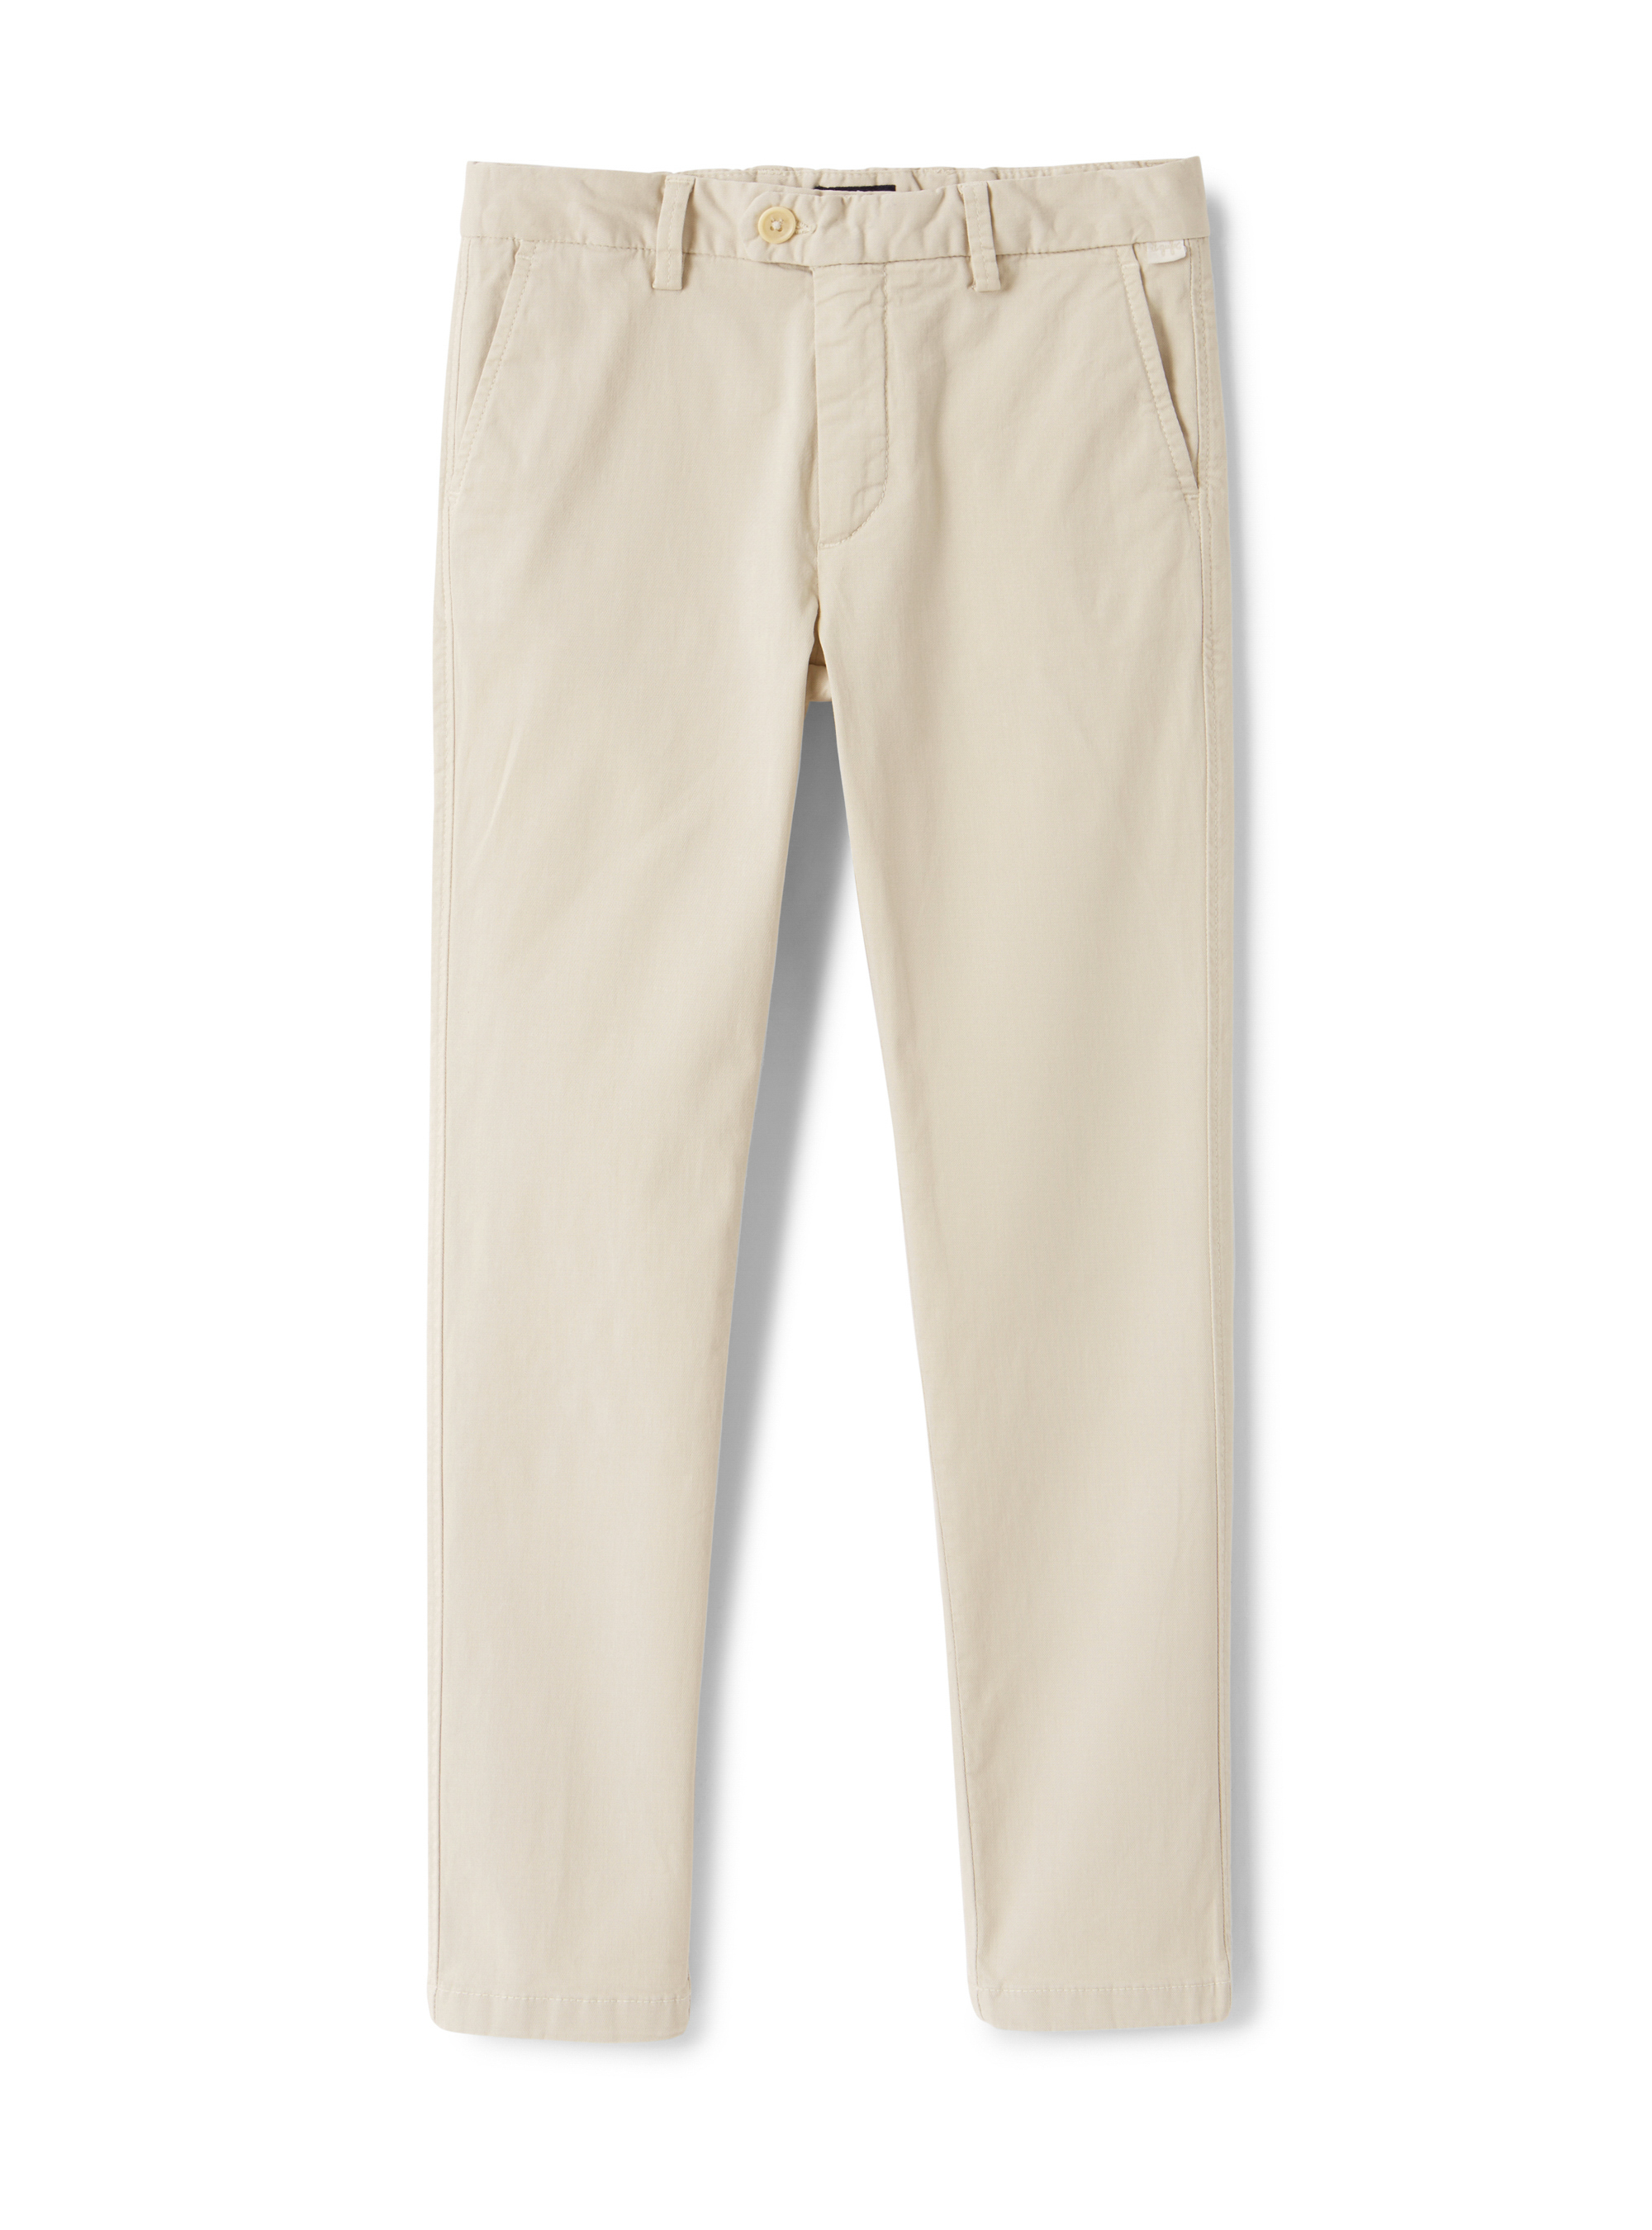 White gabardine chino trousers - Trousers - Il Gufo